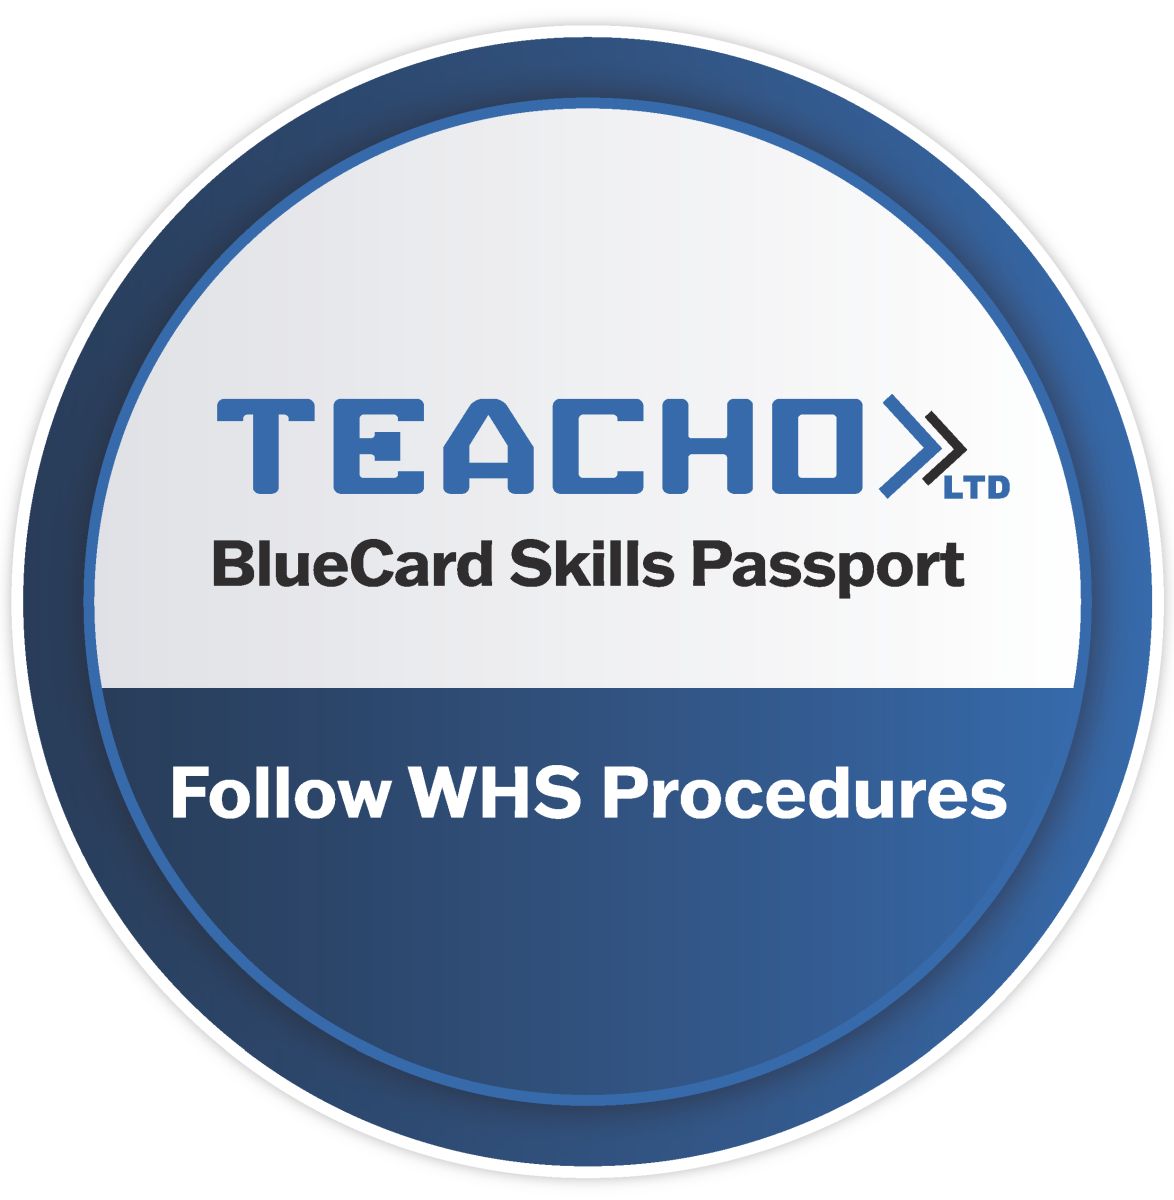 TEACHO digital badge